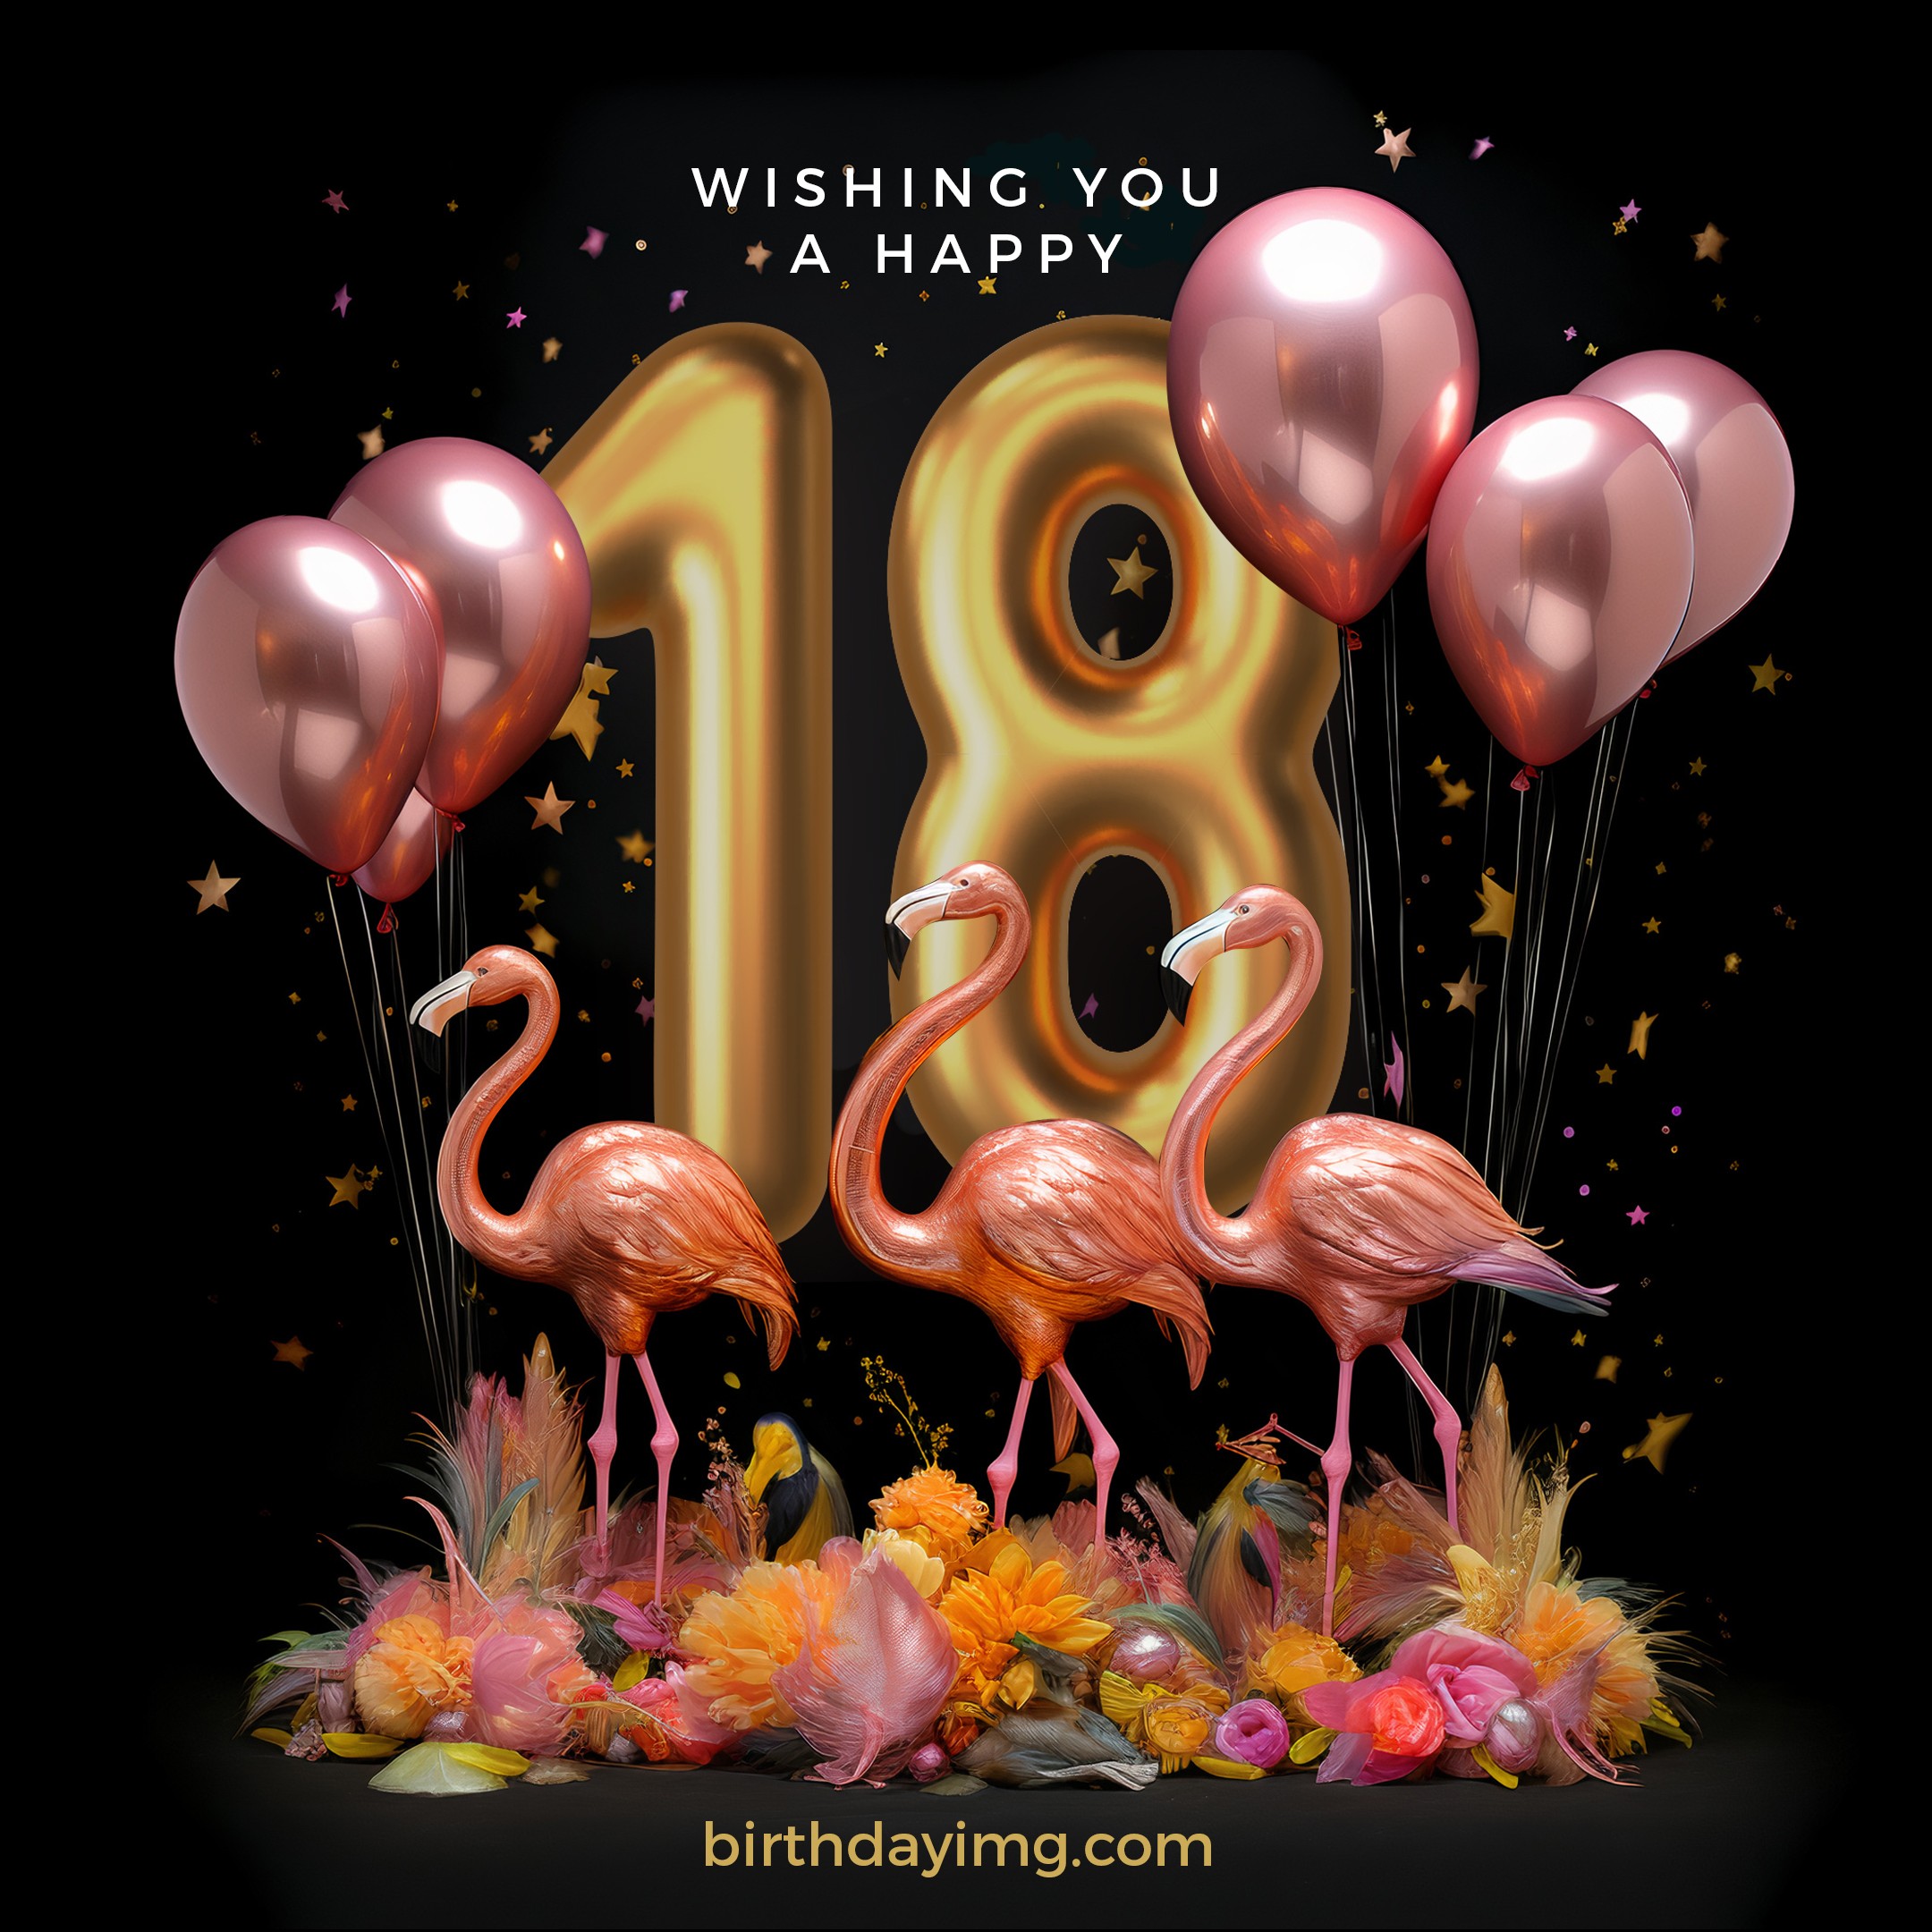 Free 18 Years Happy Birthday Image with Flamingo - birthdayimg.com